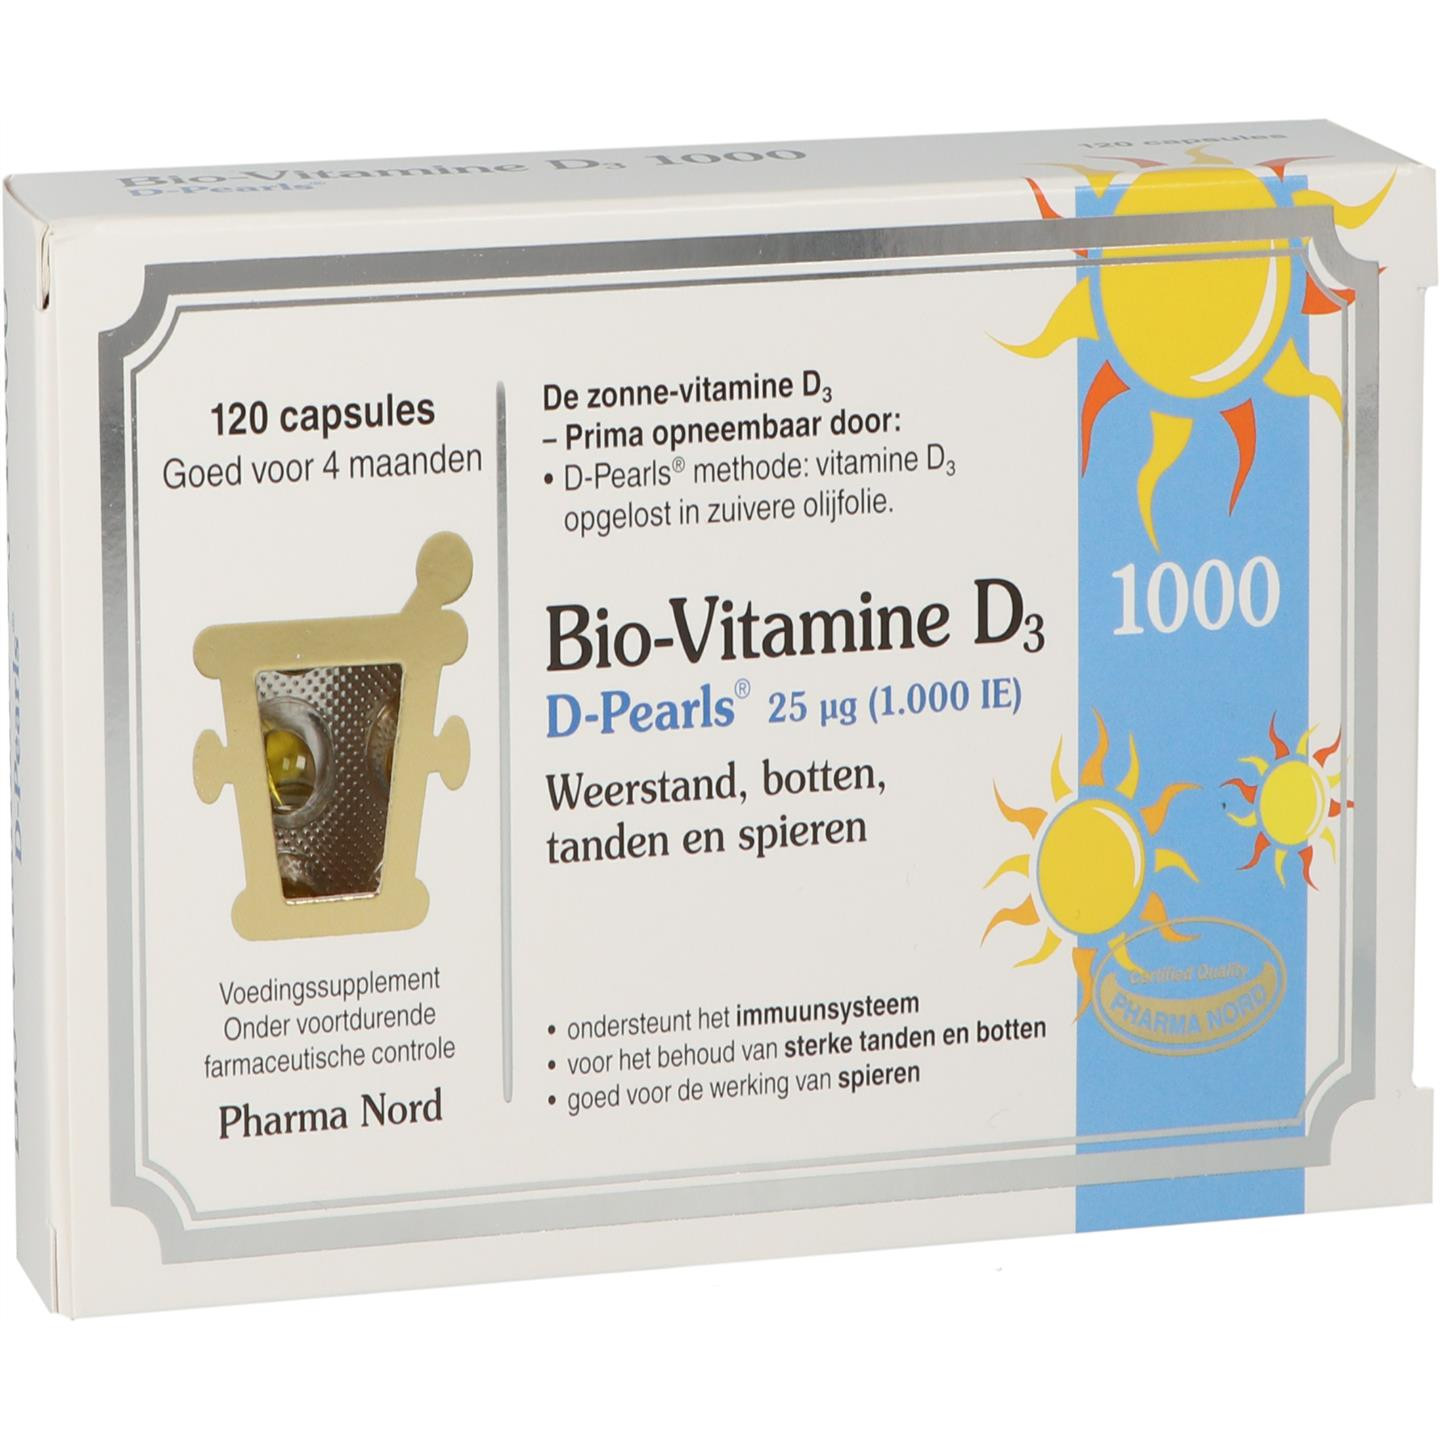 Bio-Vitamine D3 1000